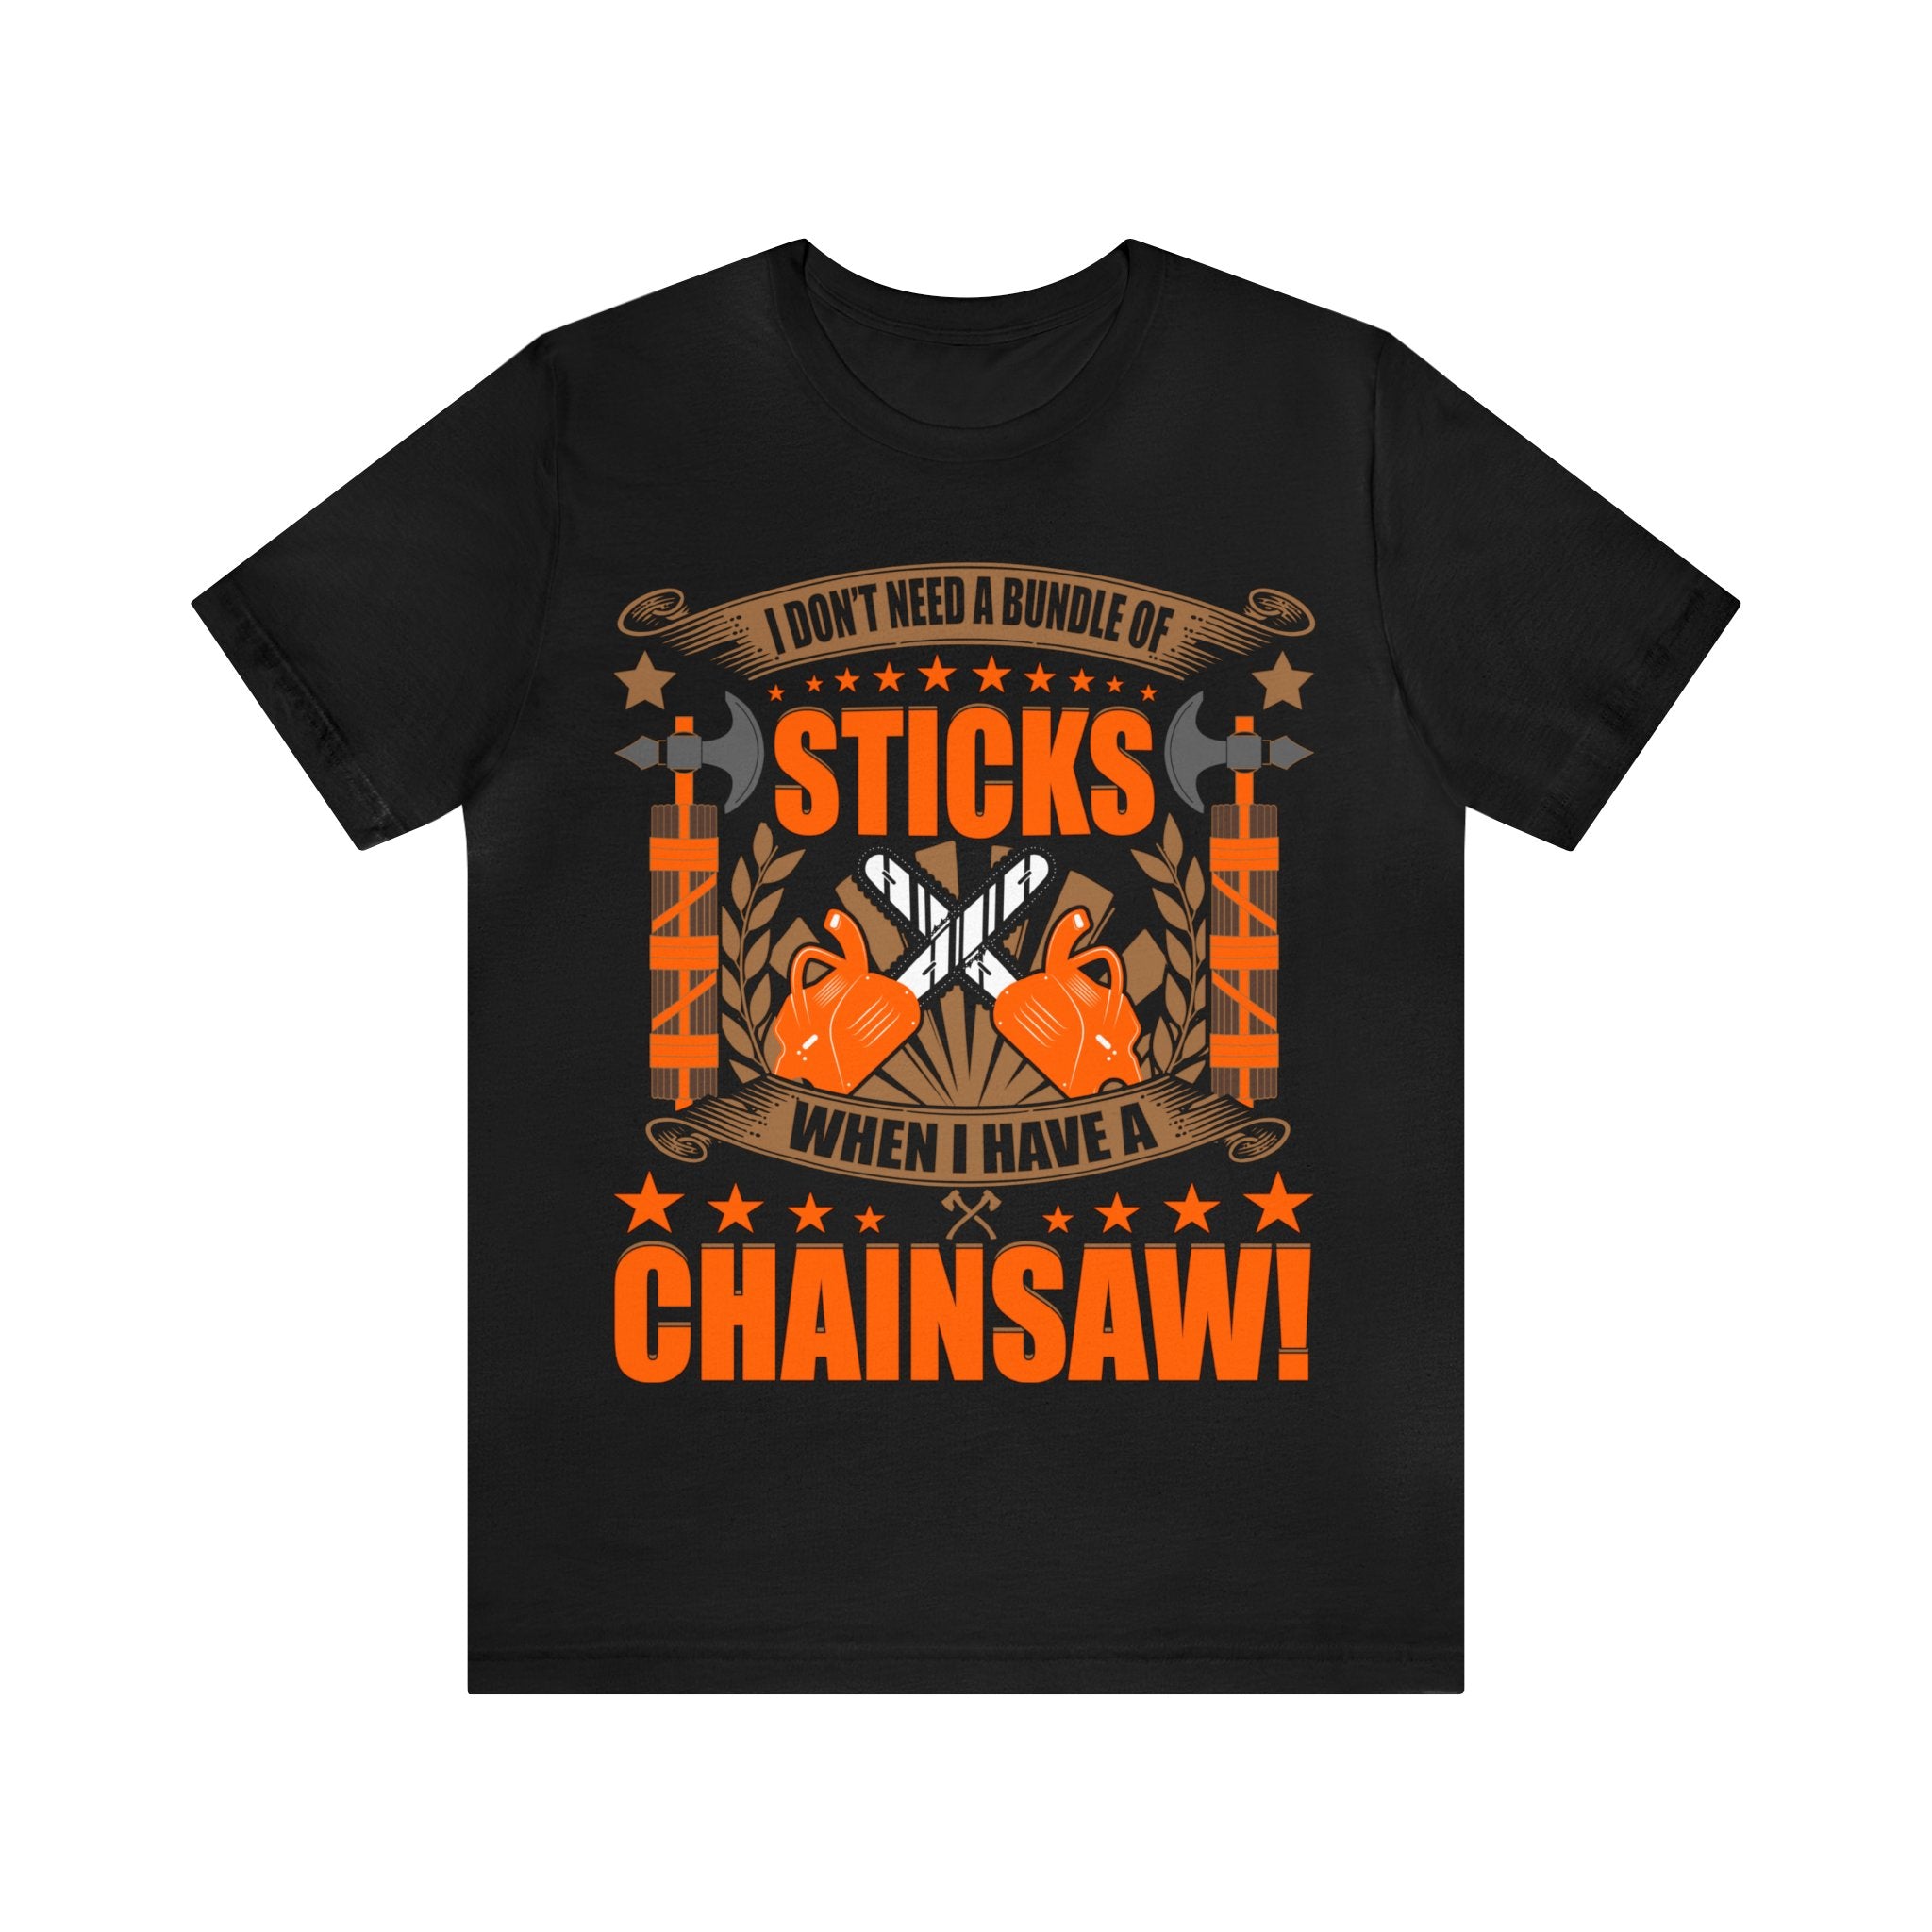 Chainsaws over Sticks